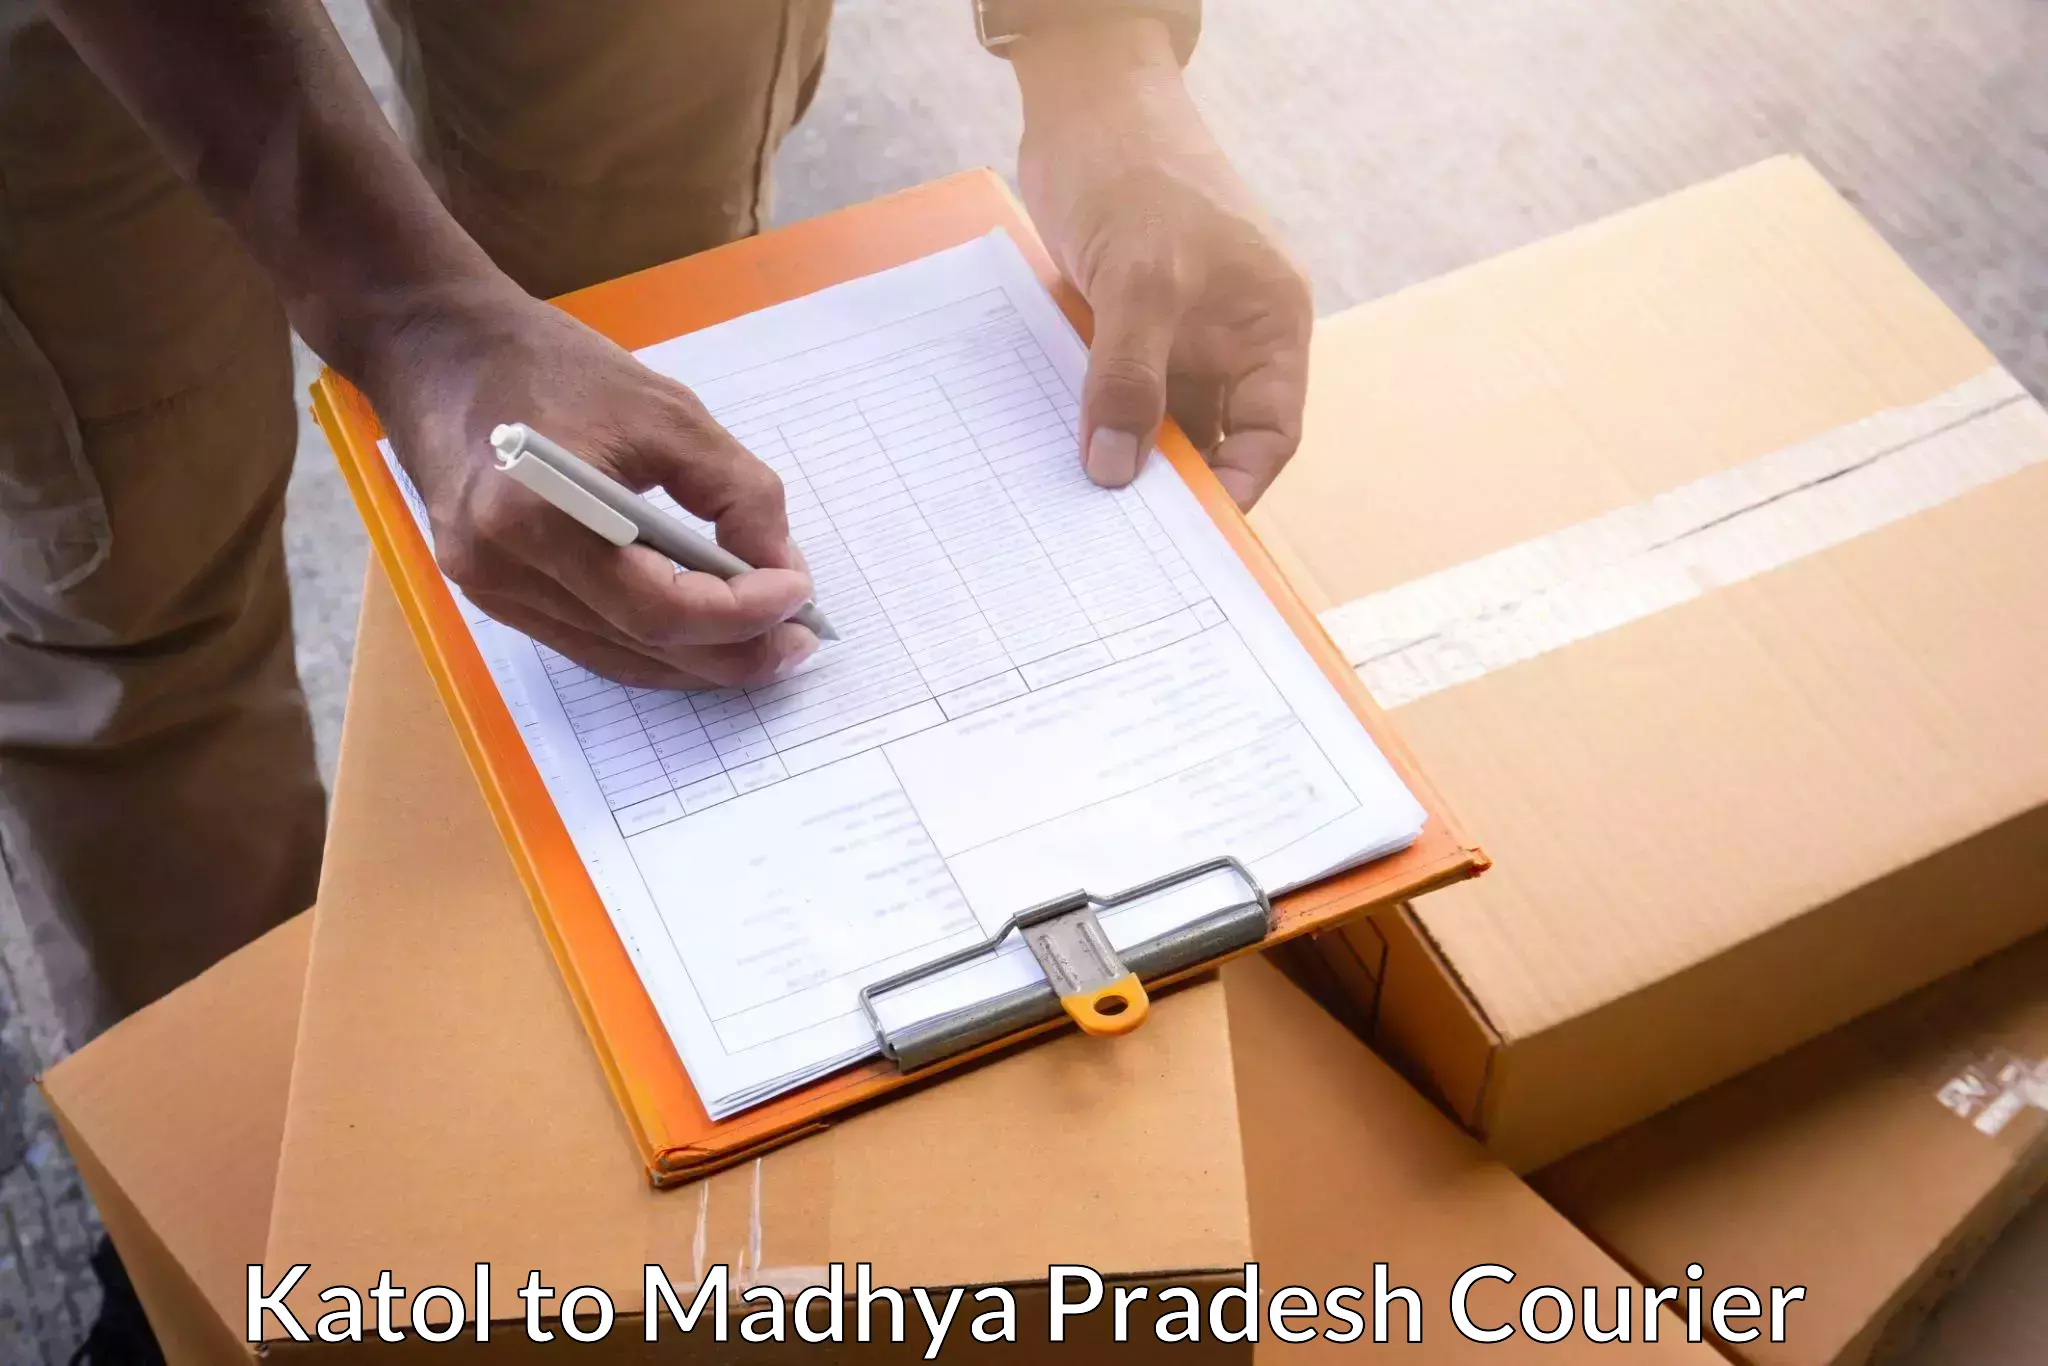 Professional courier handling Katol to Mandla